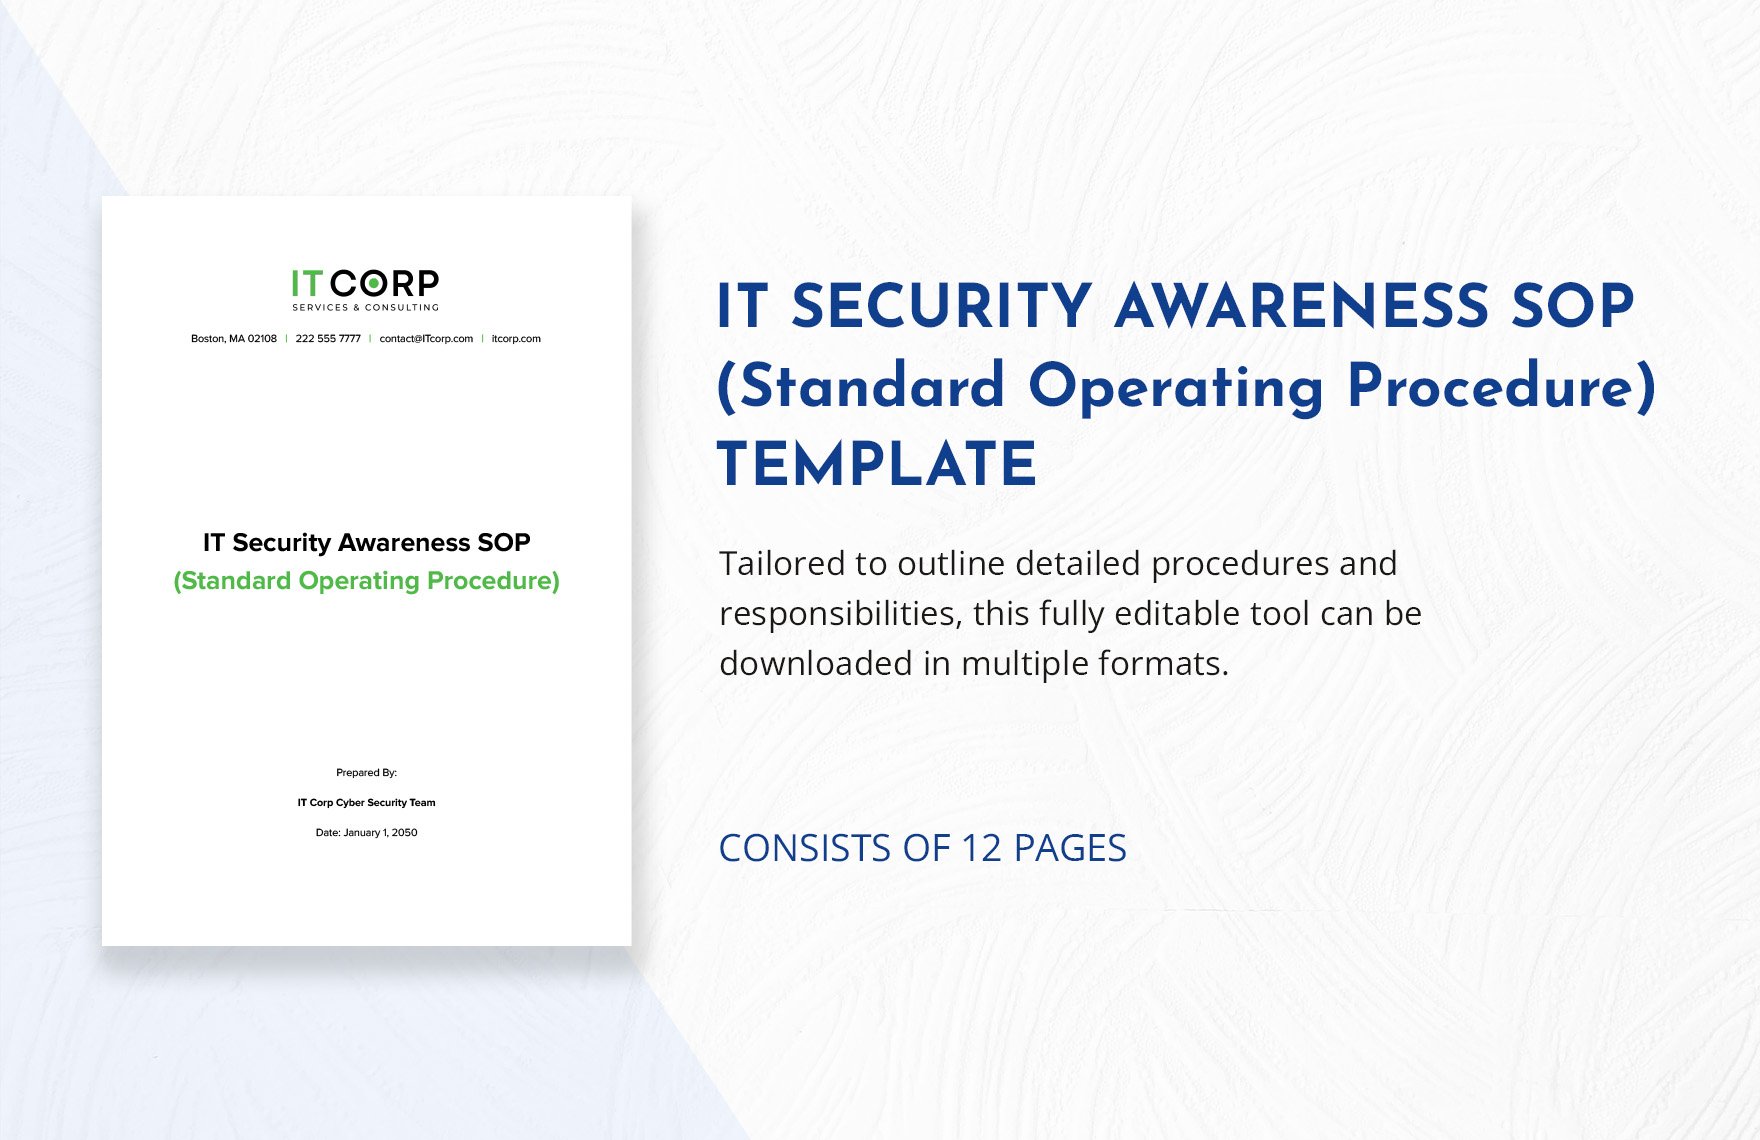 IT Security Awareness SOP (Standard Operating Procedure) Template